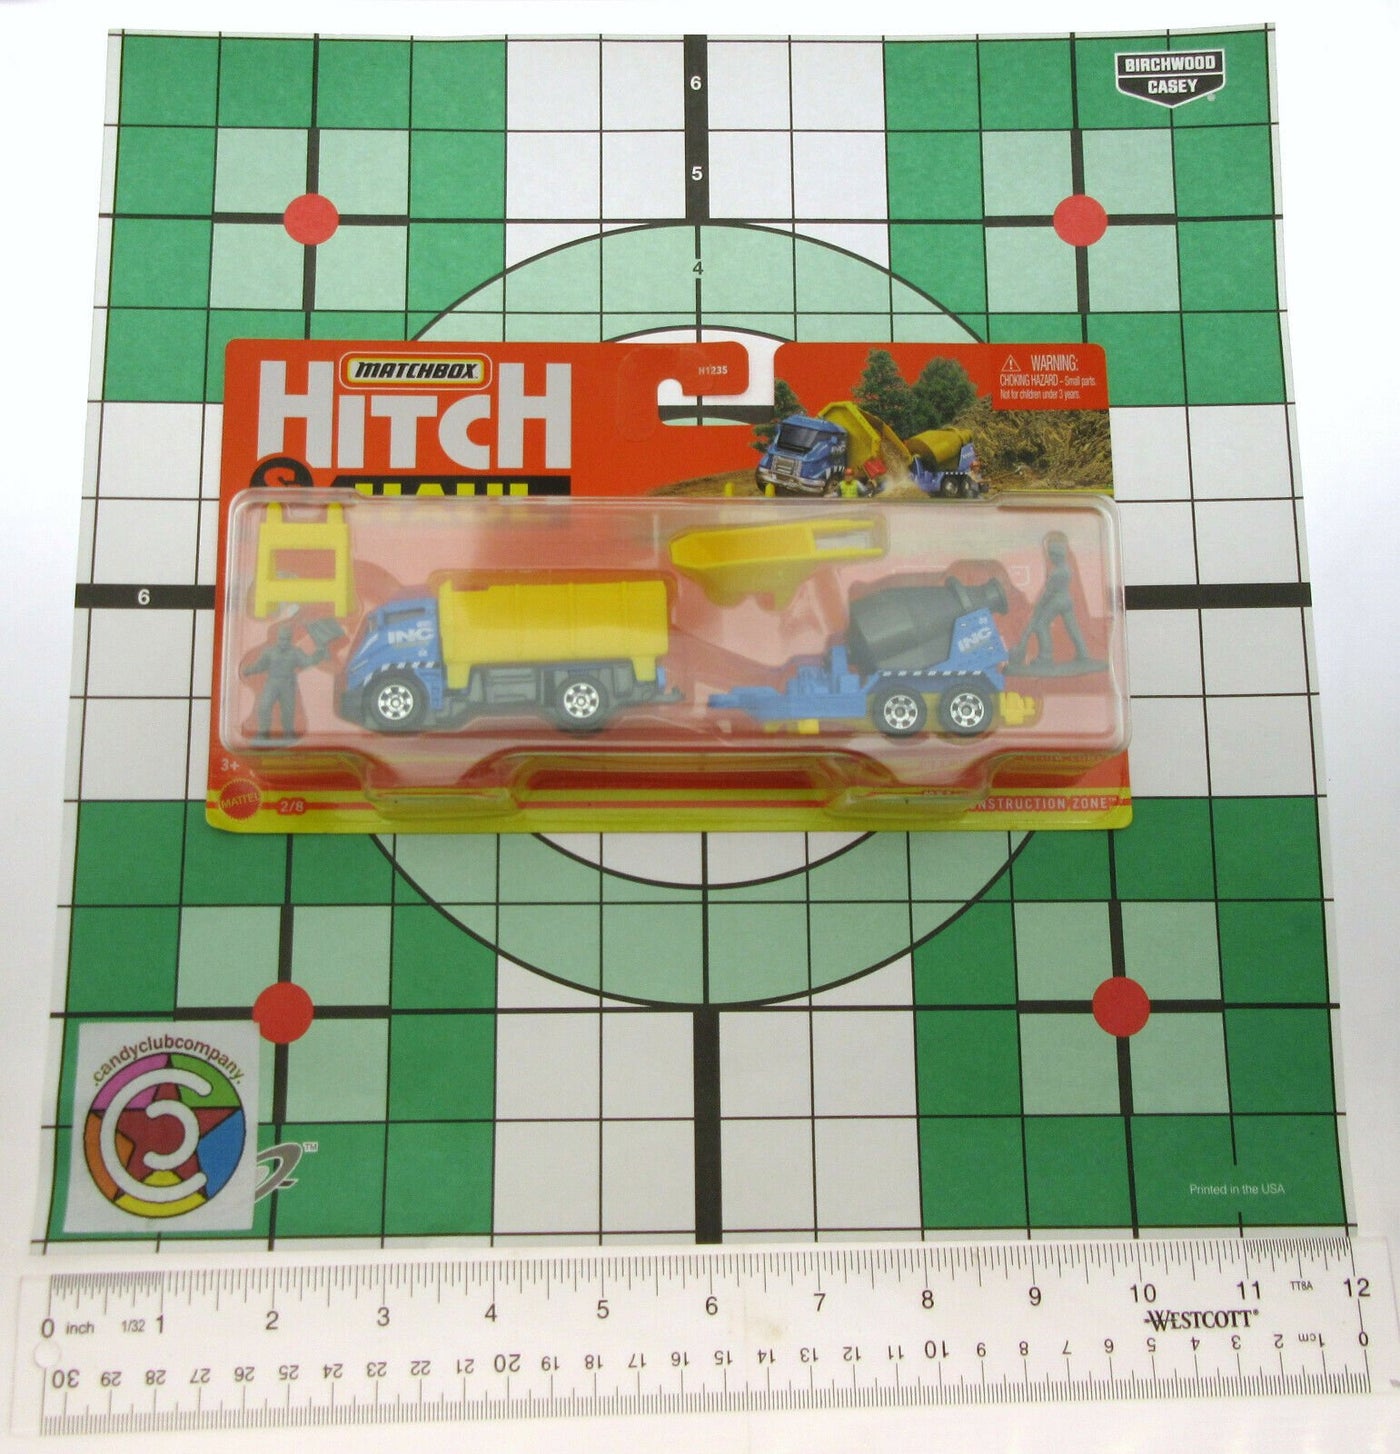 Hitch & Haul Matchbox ~ Dump Truck / MBX Cement Mixer ~ Gray ~ 1:64 scale